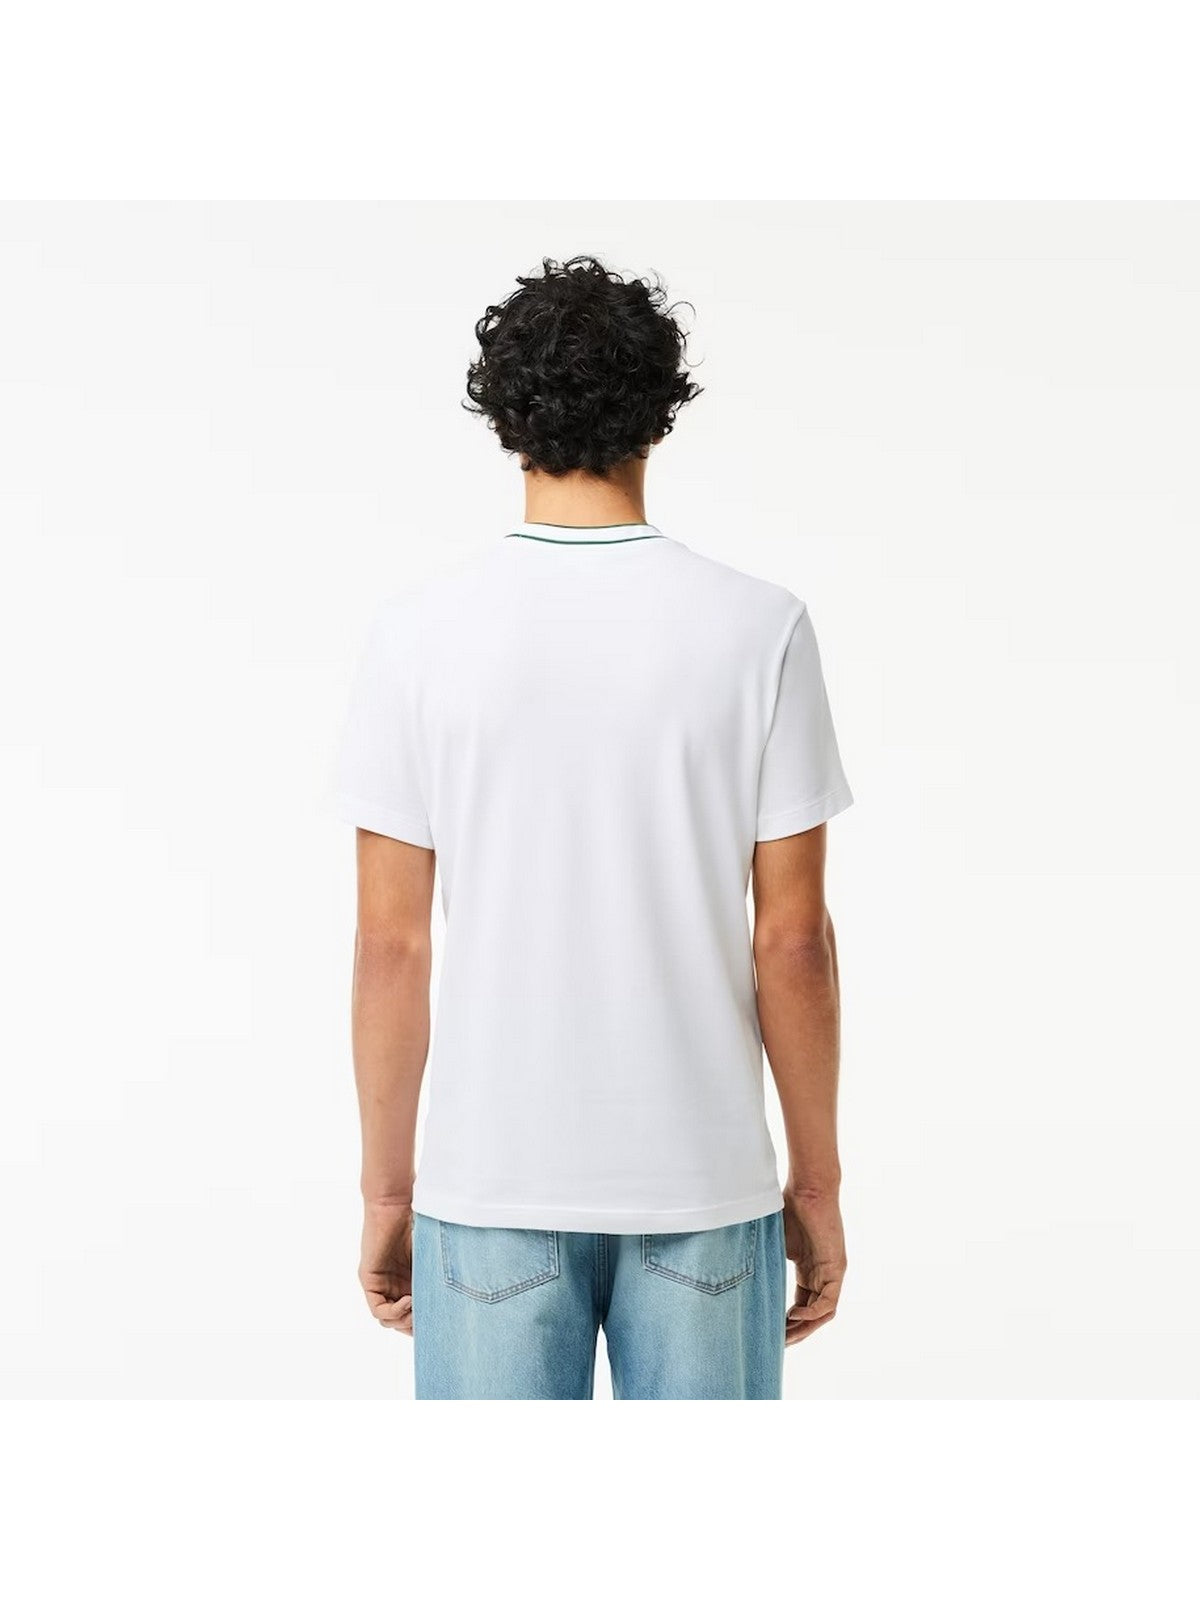 LACOSTE T-Shirt e Polo Uomo  TH8174 001 Bianco